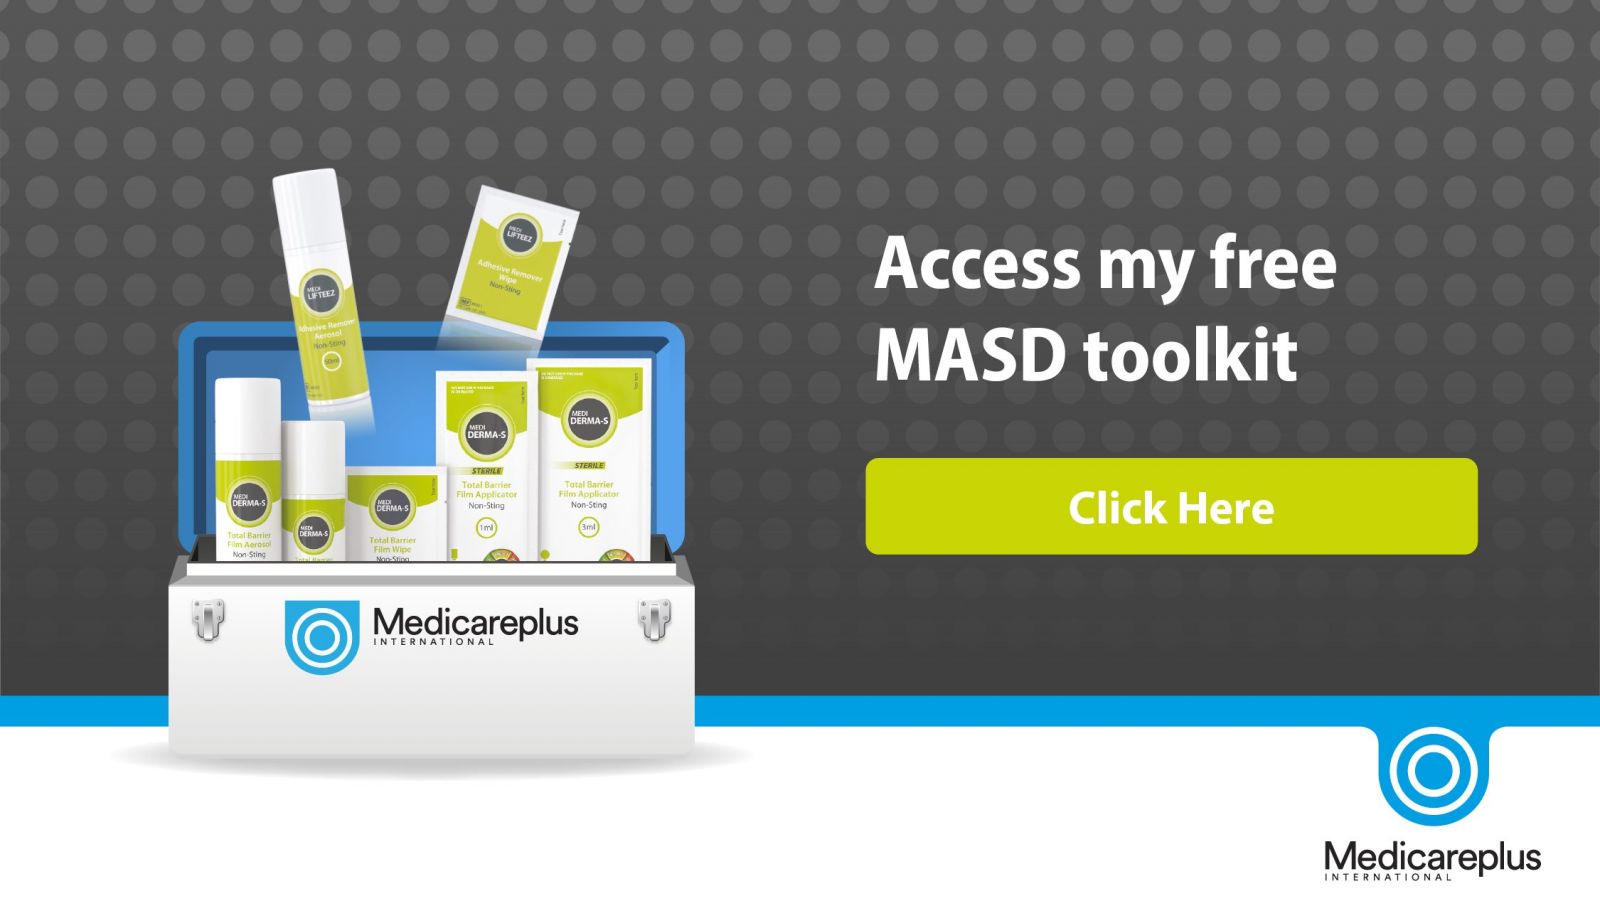 Access my free MASD toolkit